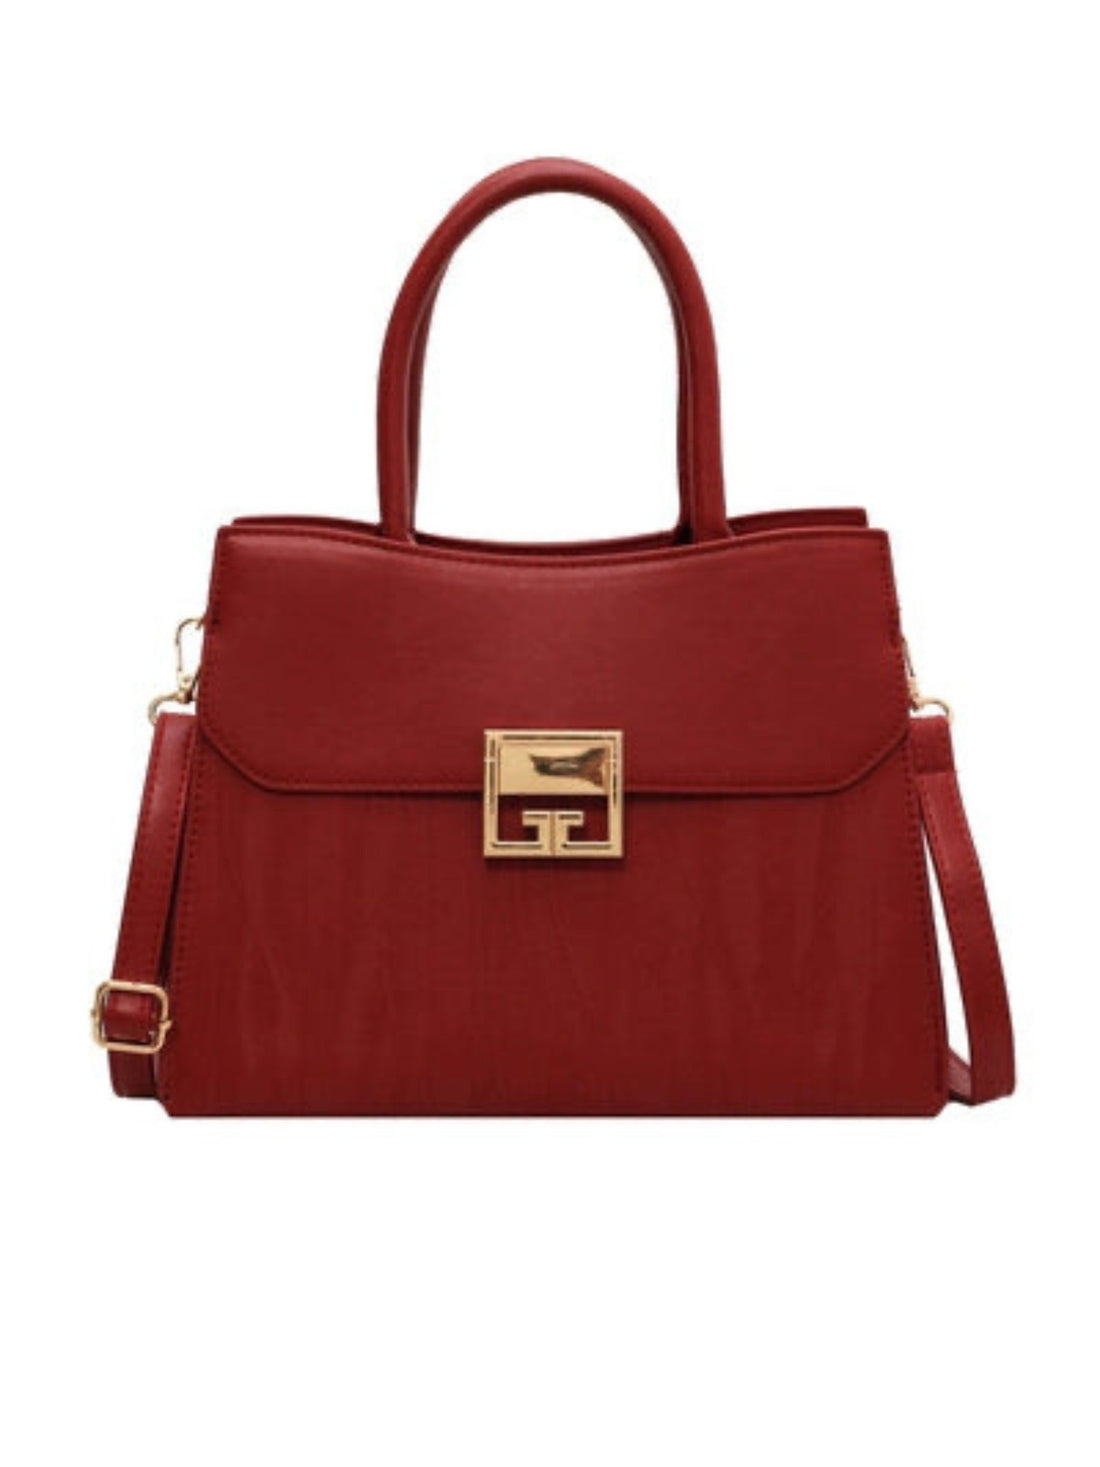 LaPose Fashion - Zanka Faux Leather Shoulder Bag - Accesories, Bags, Faux Leather Bags, Handbags, Large Bags, Shoulder Bags